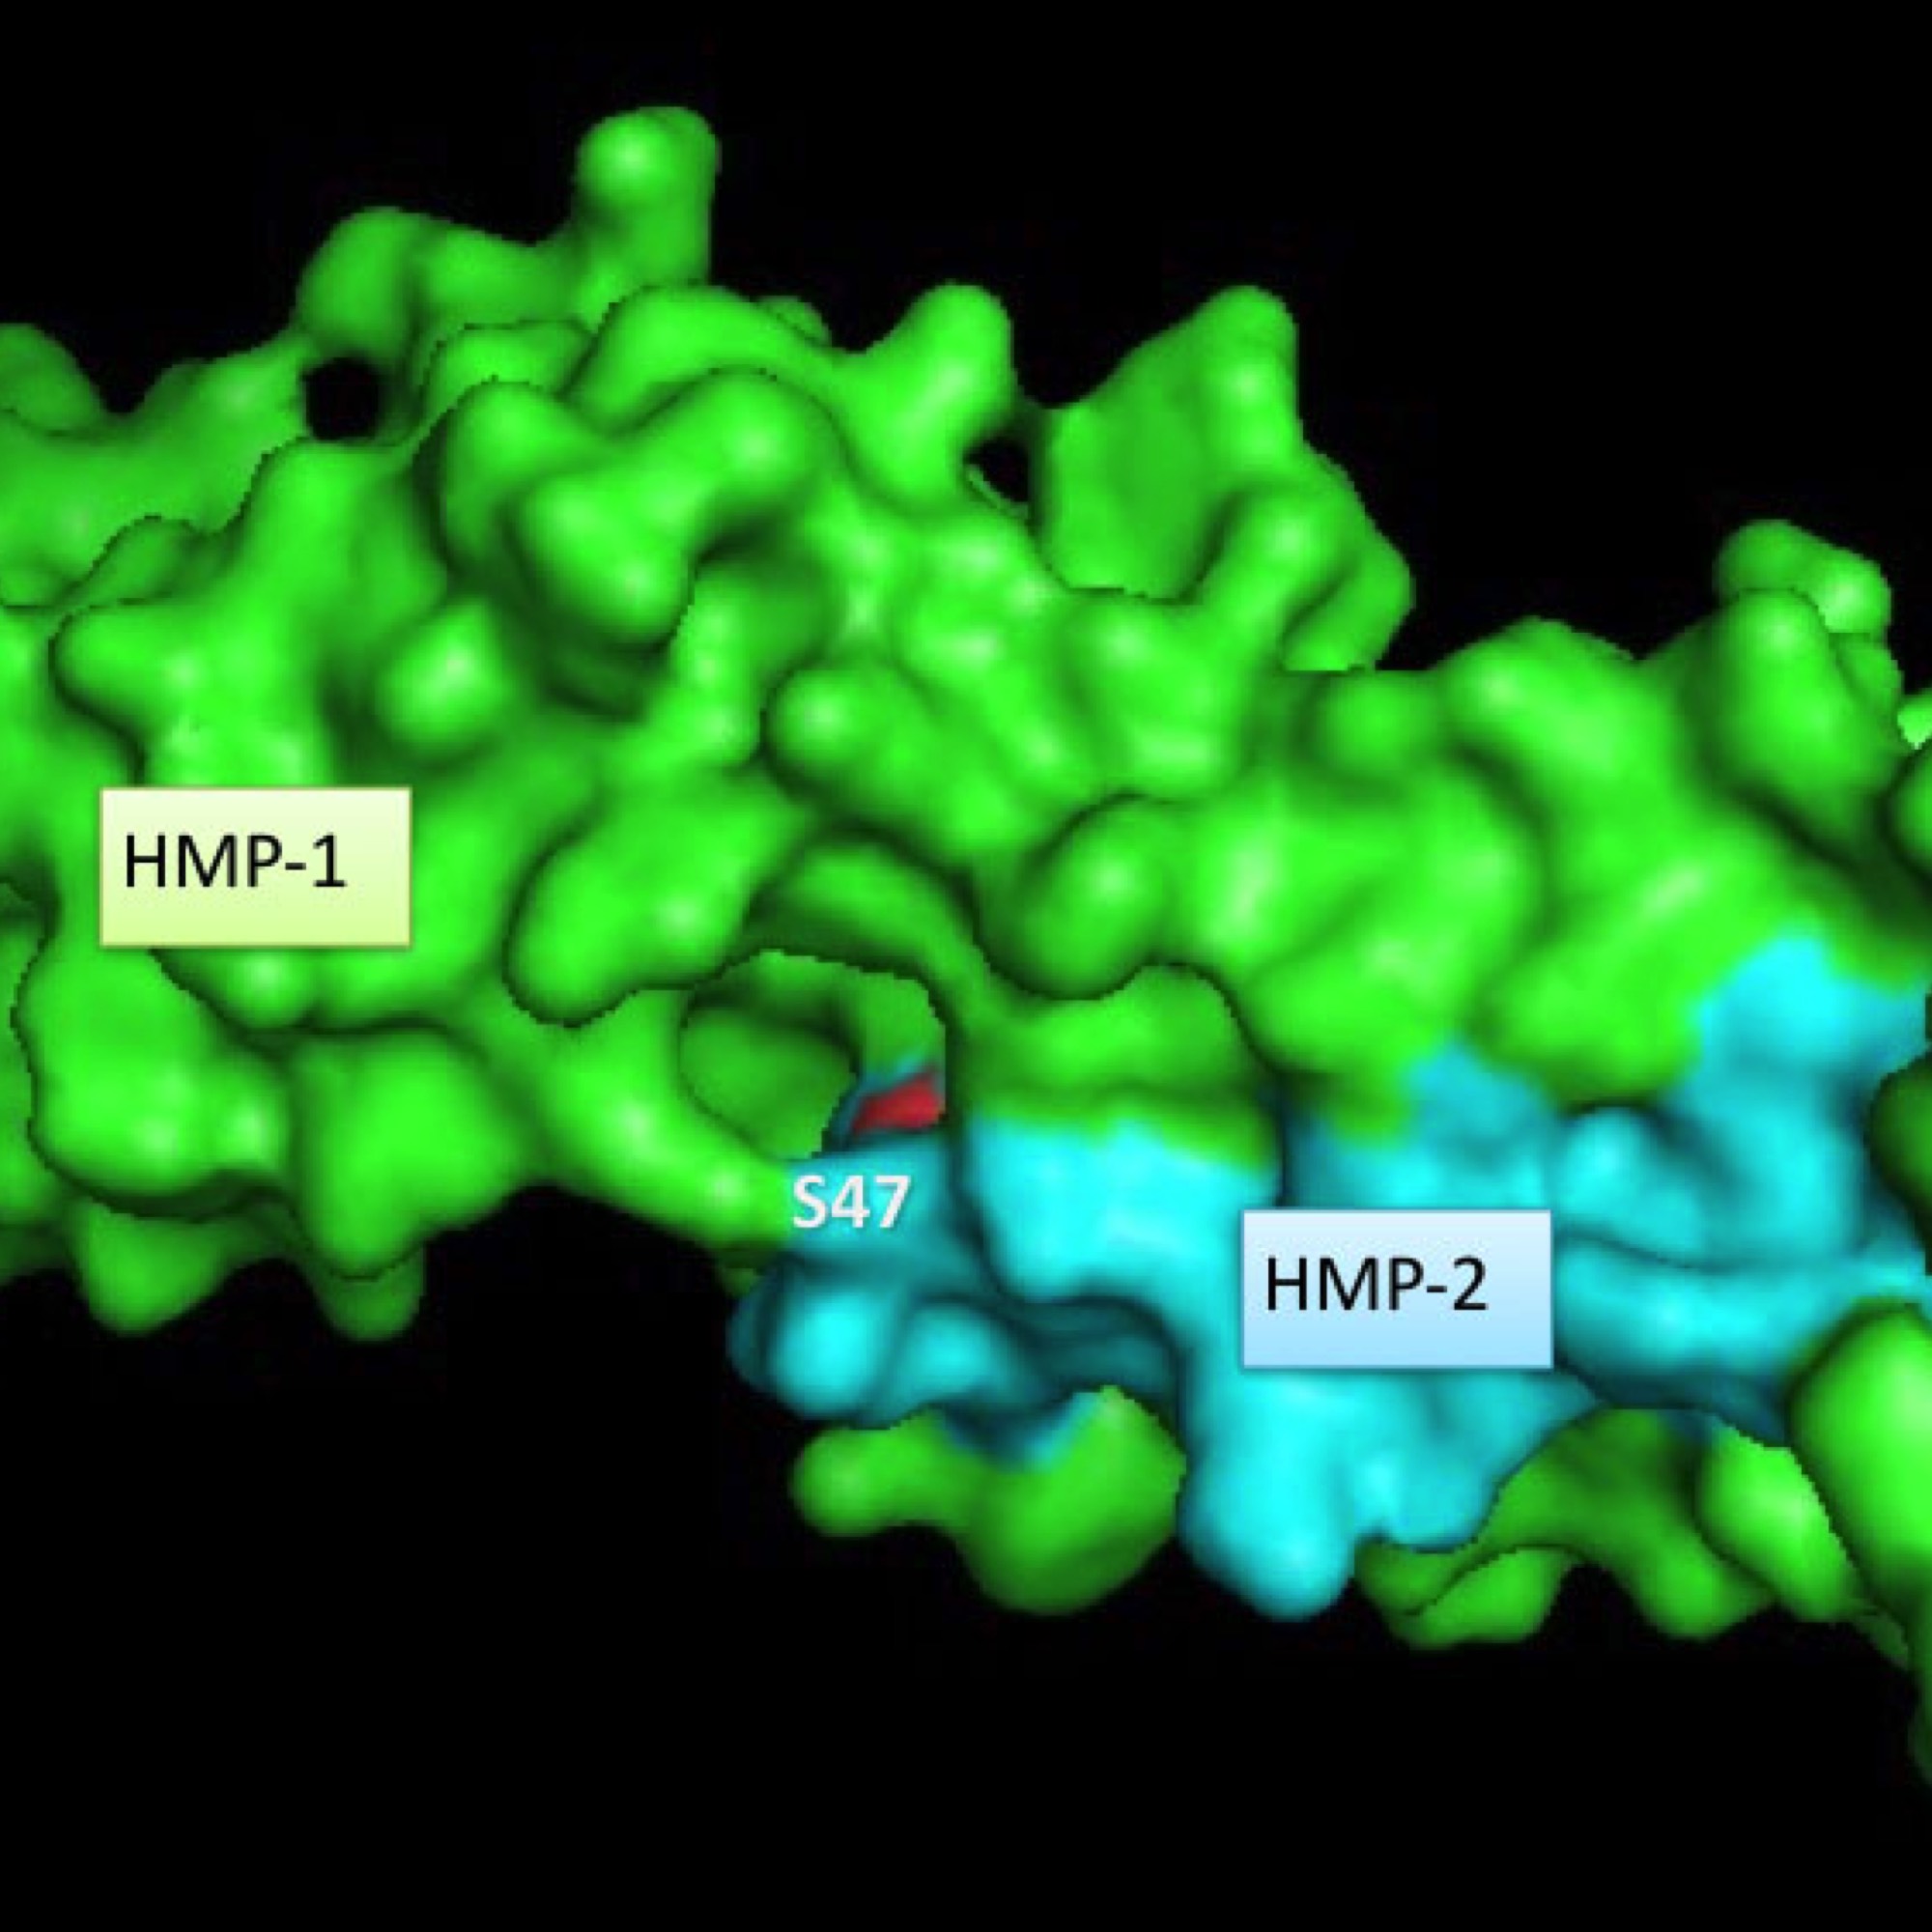 co-crystal of HMP-1 (green) and HMP-2 (aqua) [H.-J. Choi/T. Loveless]